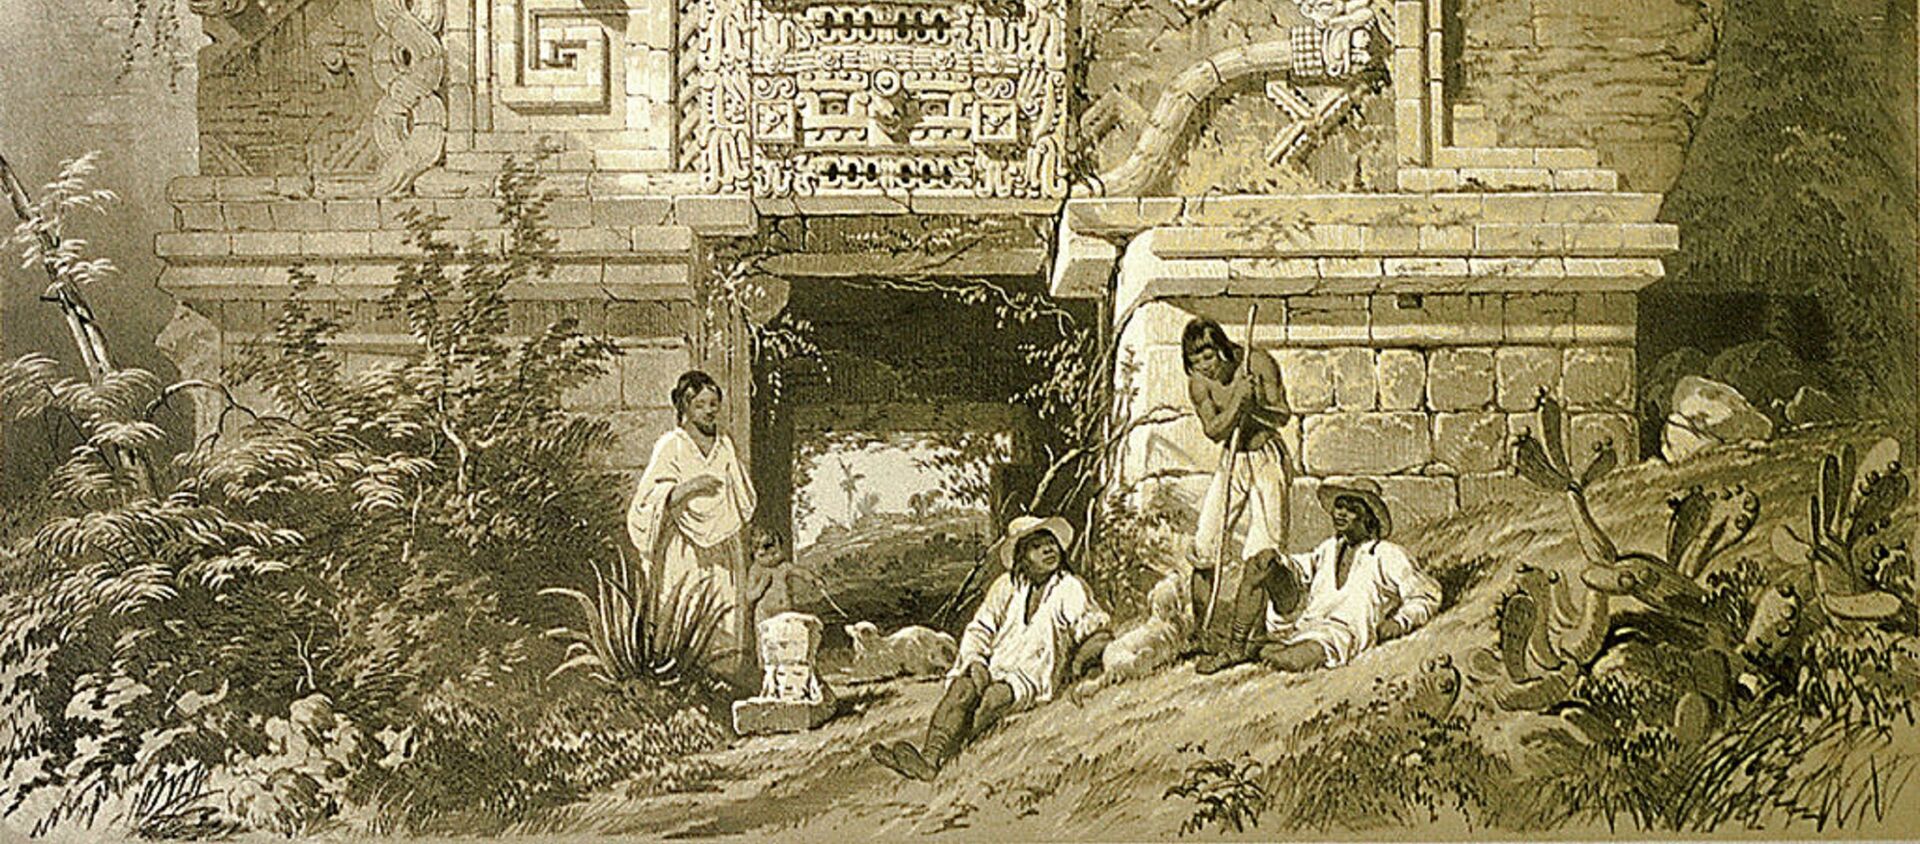 Un monumento de la cultura maya, imagen ilustrativa - Sputnik Mundo, 1920, 07.09.2020